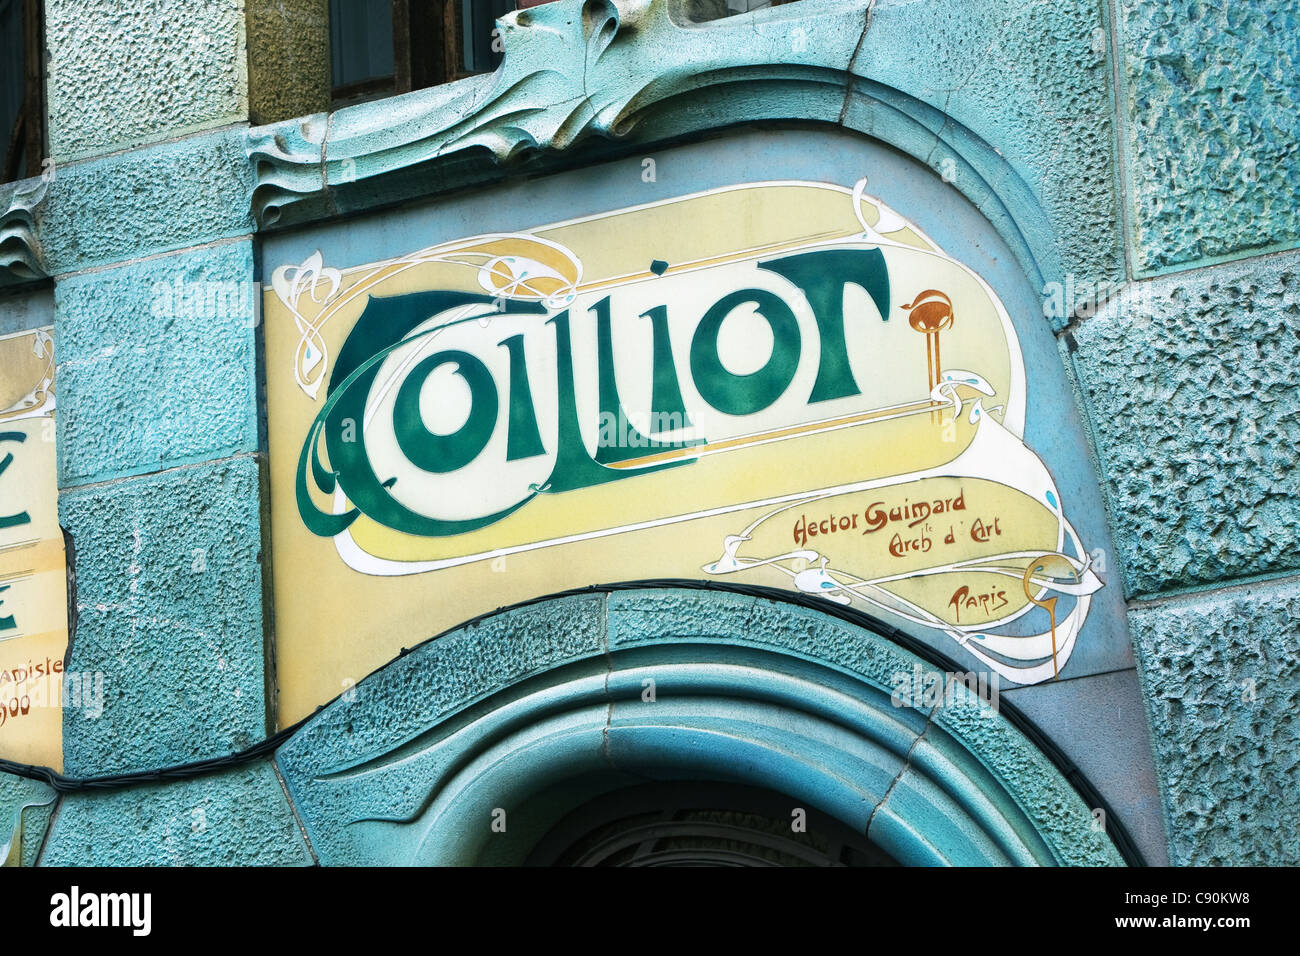 Maison Coillot Lille, France Stock Photo